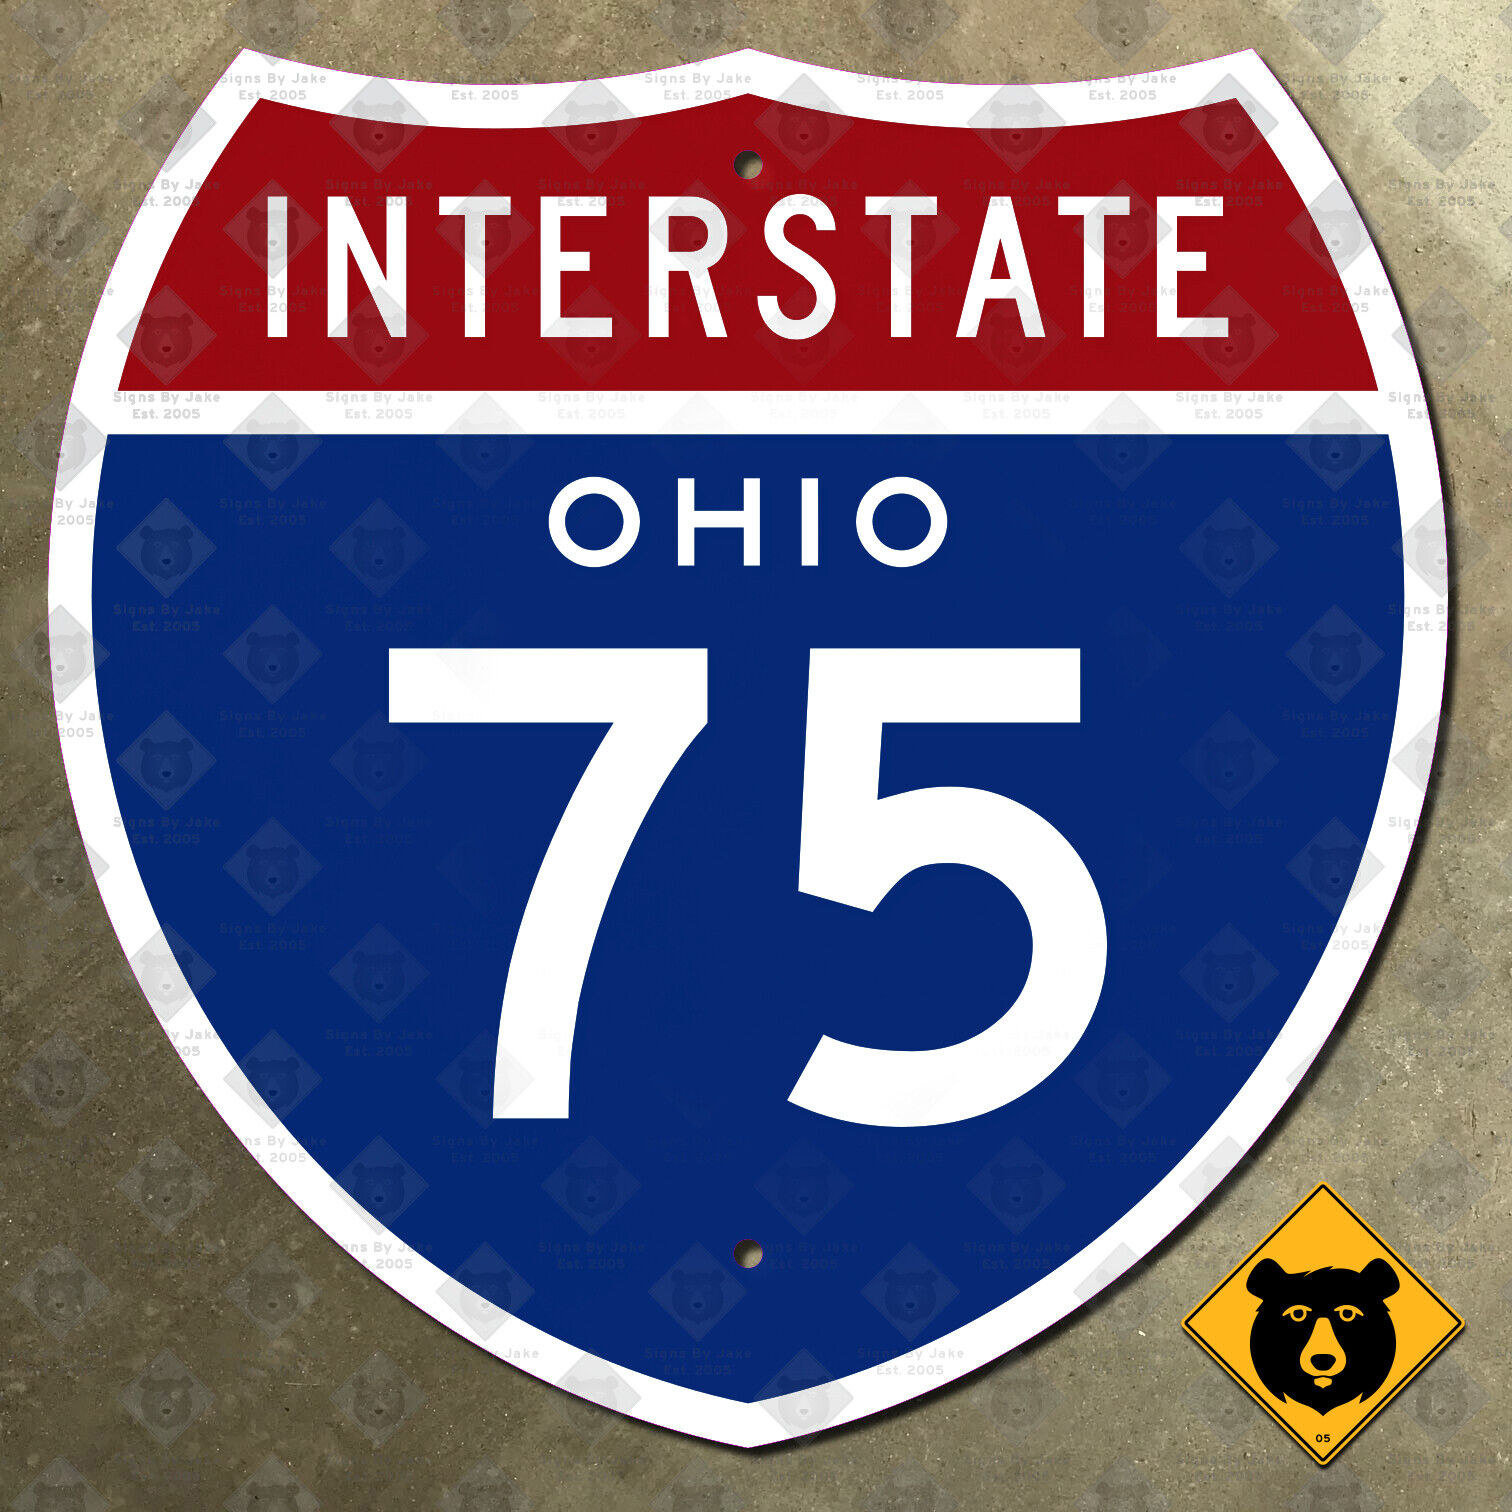 Ohio Interstate 75 highway route sign 1957 Cincinnati Dayton Toledo 12x12